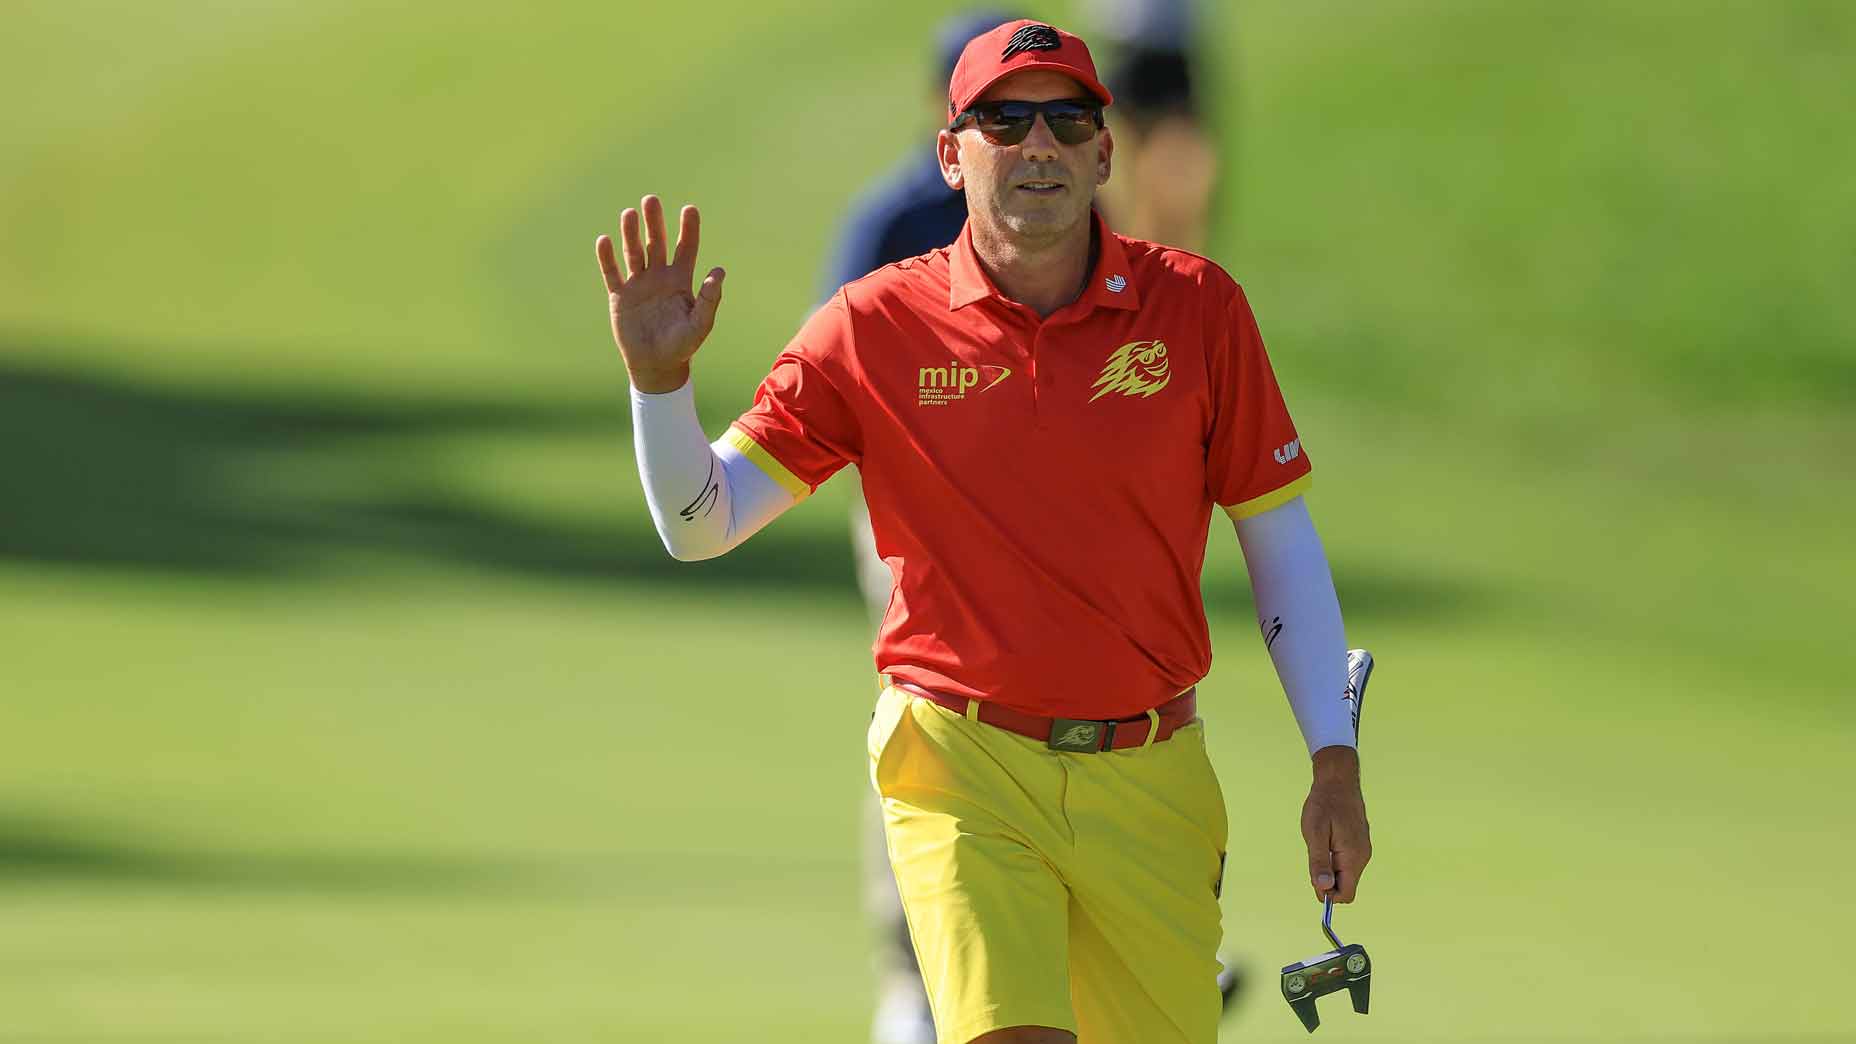 Shocking final-hole miss helps Sergio Garcia win LIV Golf Andalucia